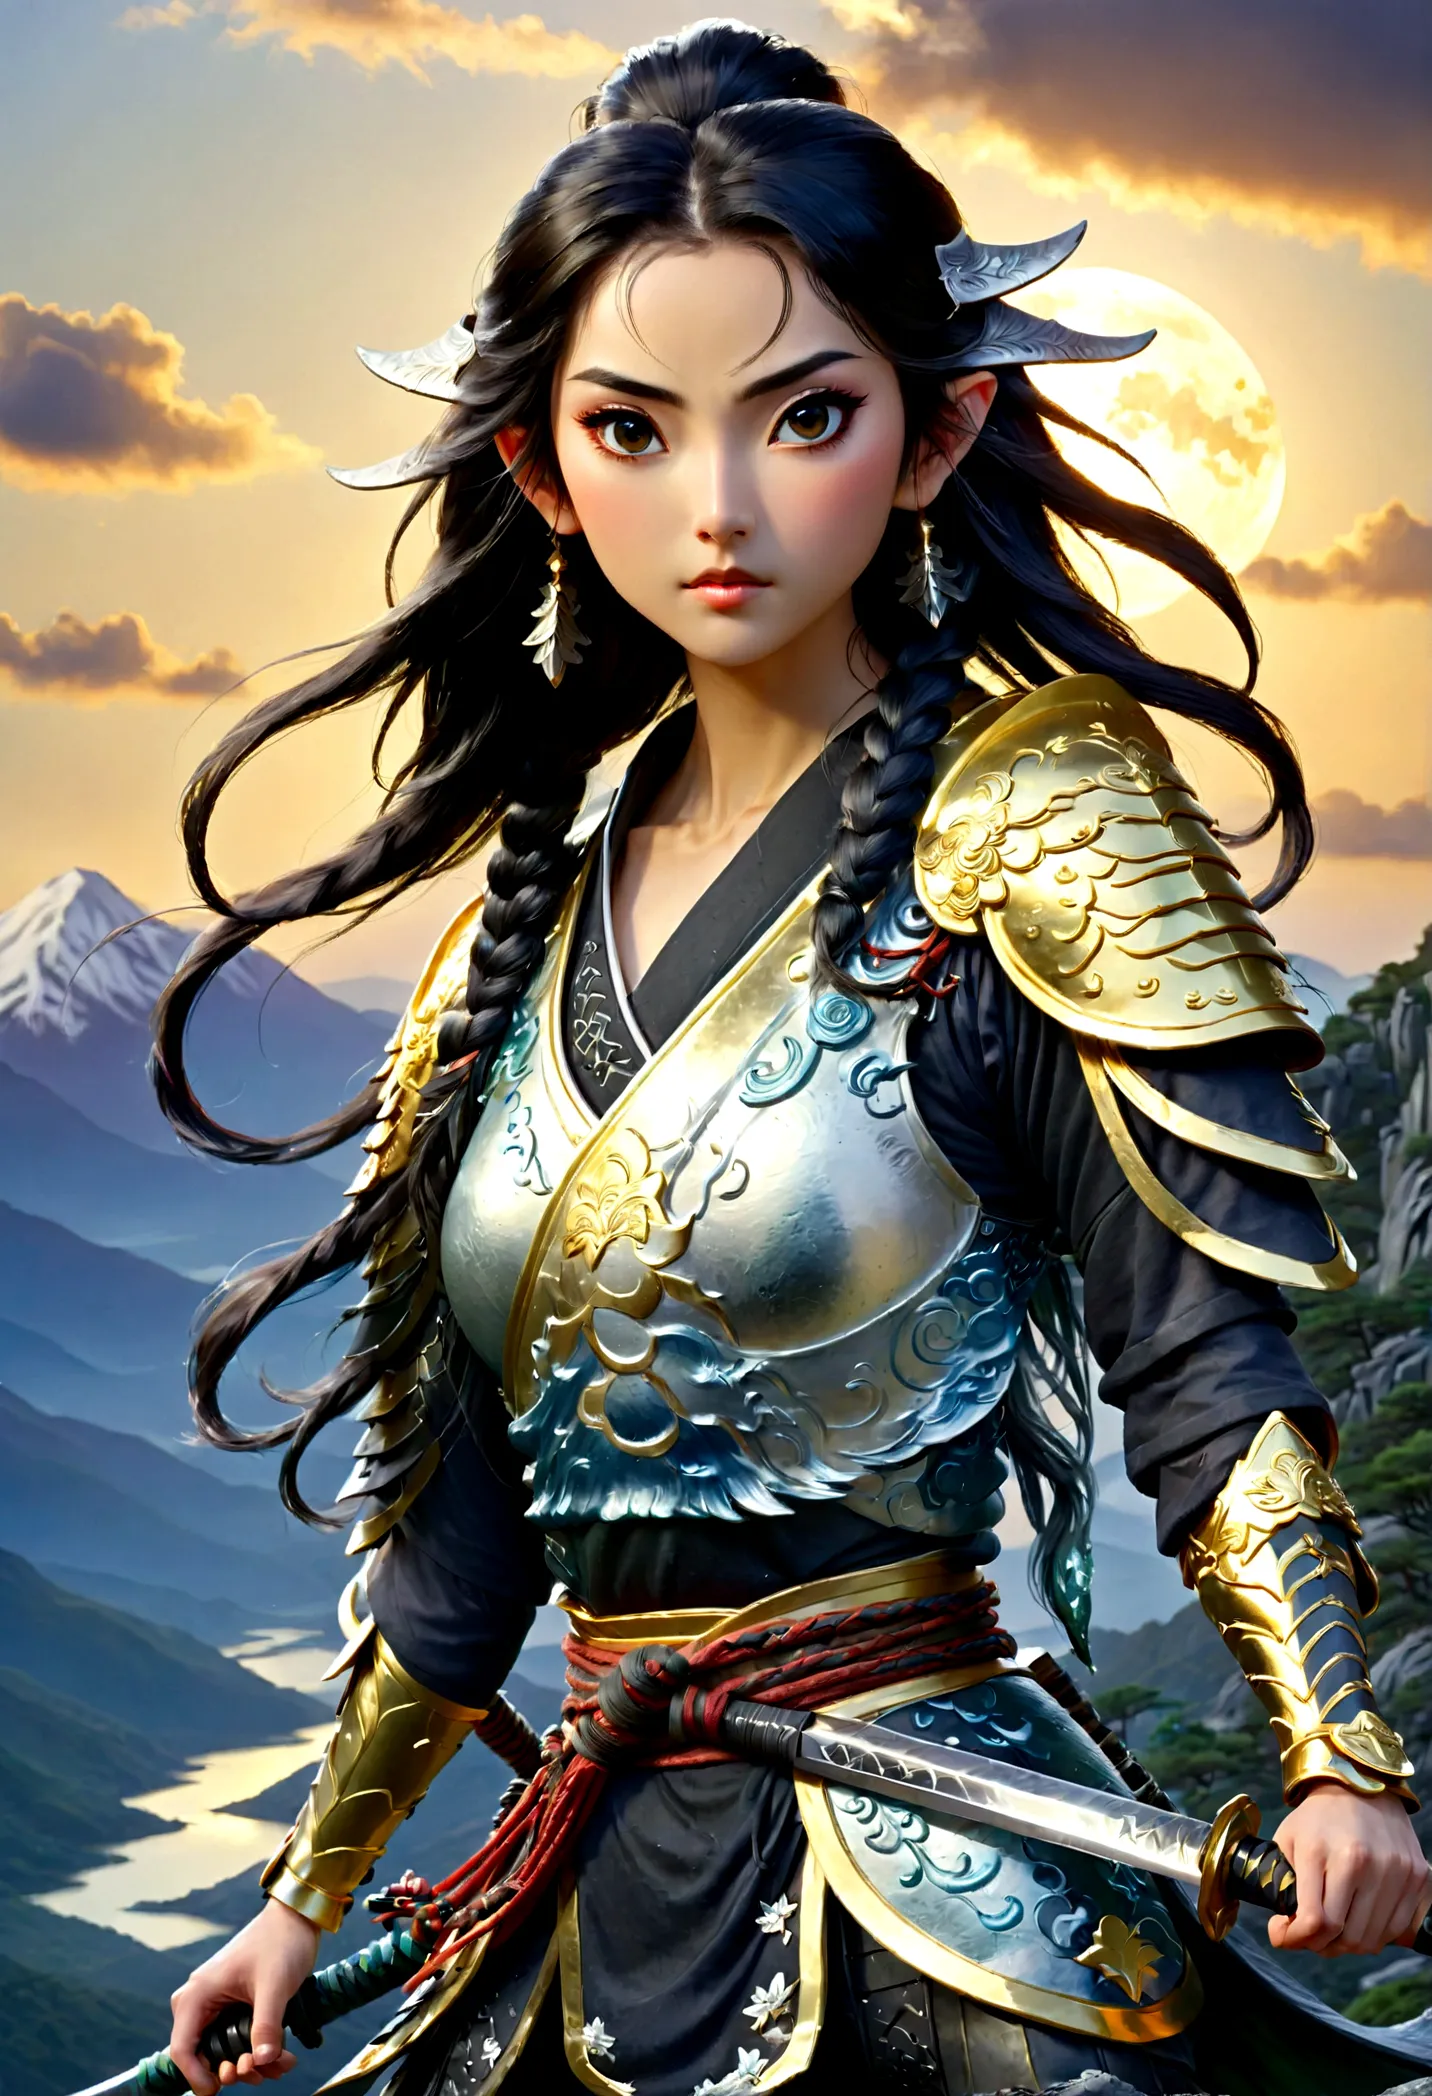 ((water color art: 1.5)), fantasy art, RPG art, dark fantasy art, a female elf samurai, ready to battle, she wears traditional s...